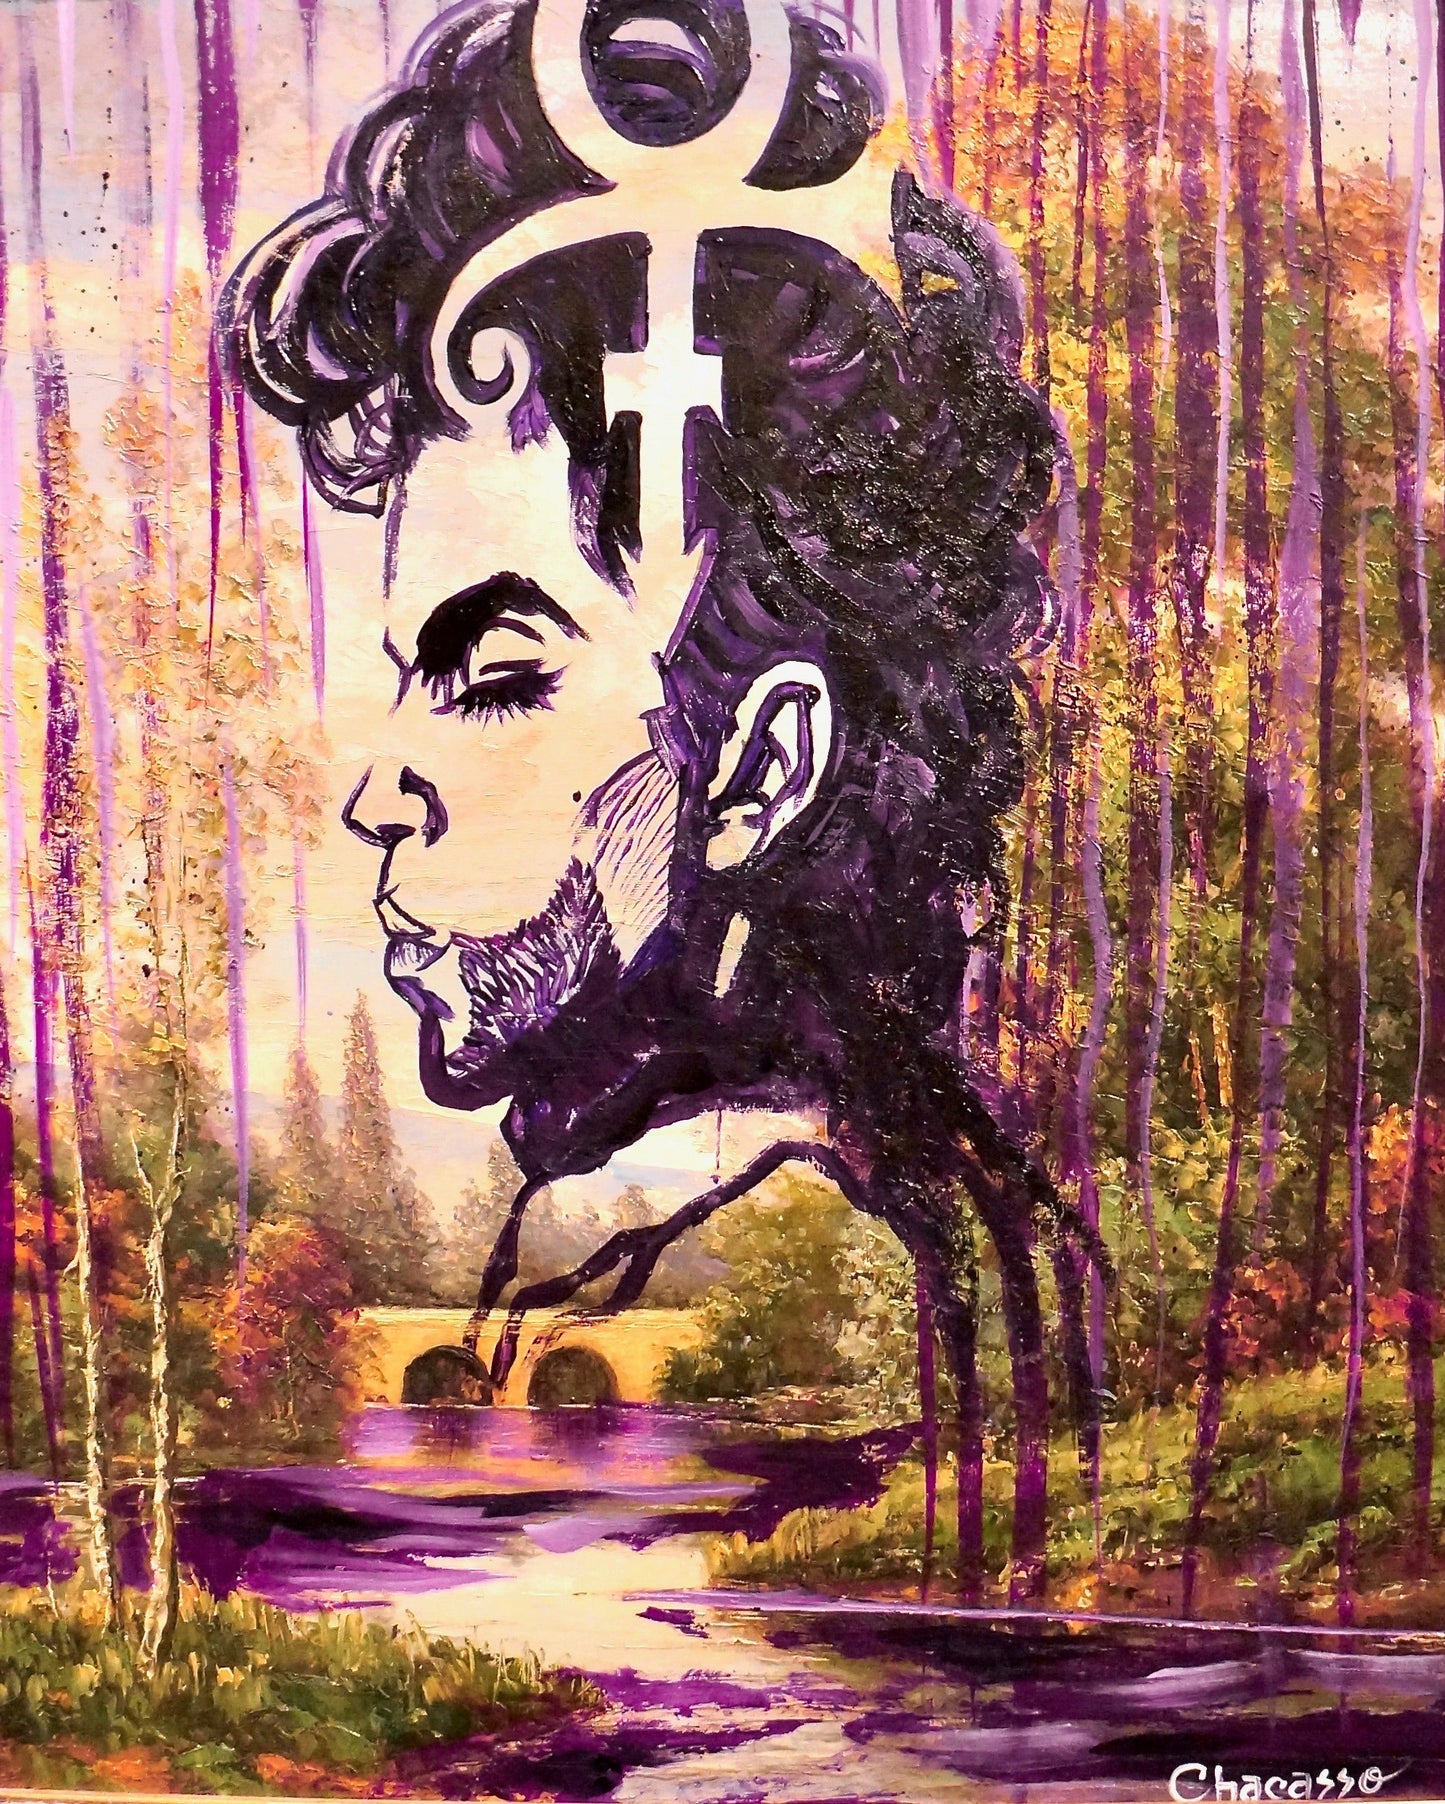 Purple Rain Prince